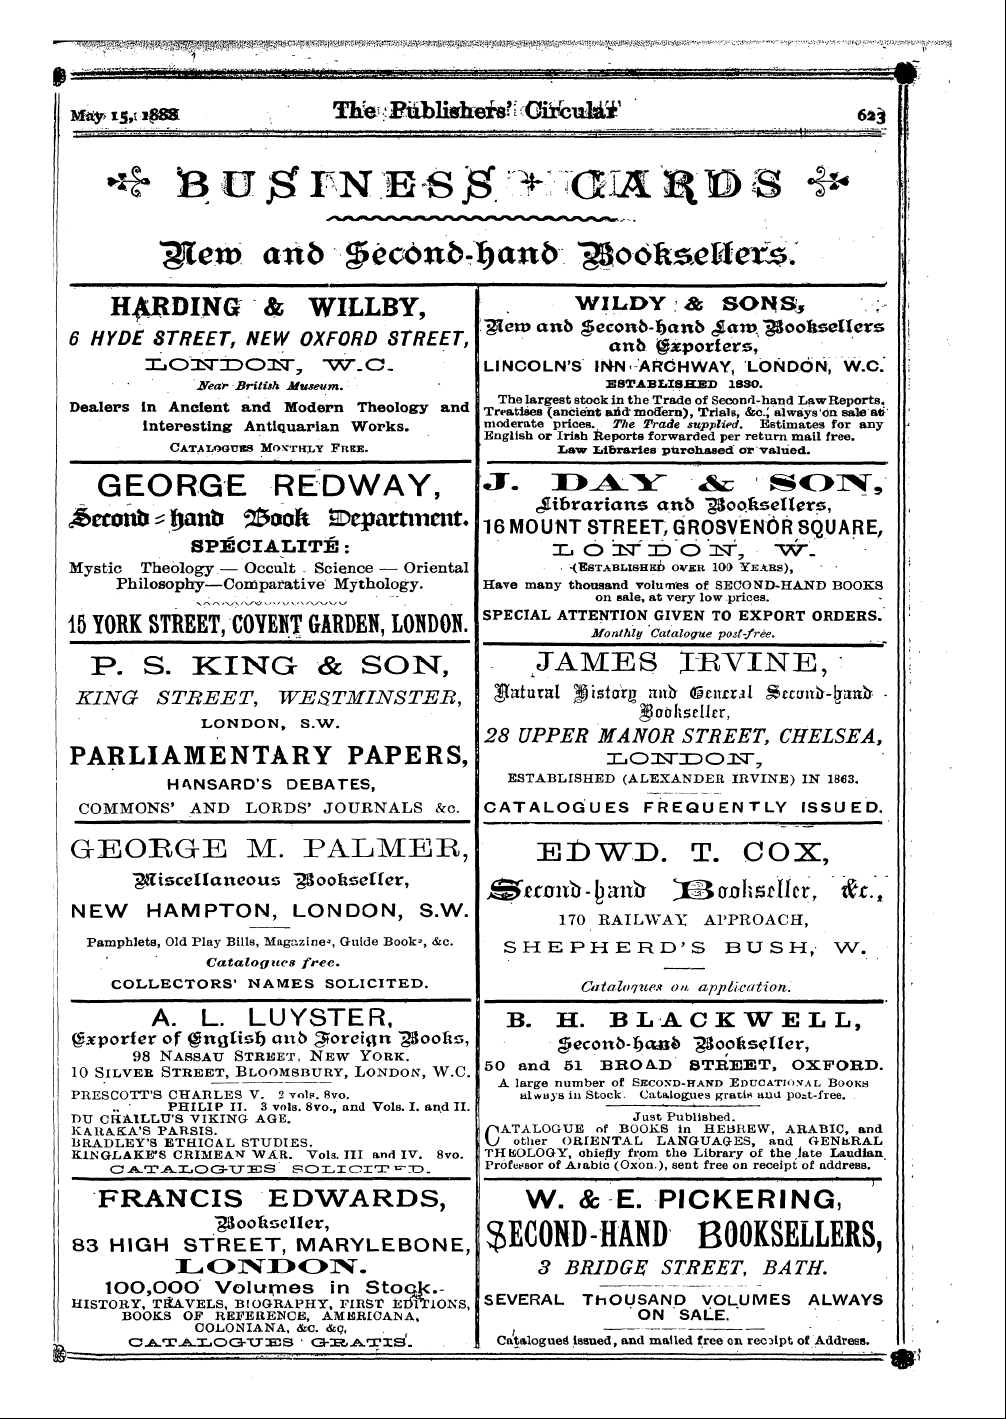 Publishers’ Circular (1880-1890): jS F Y, 1st edition - Ad12505